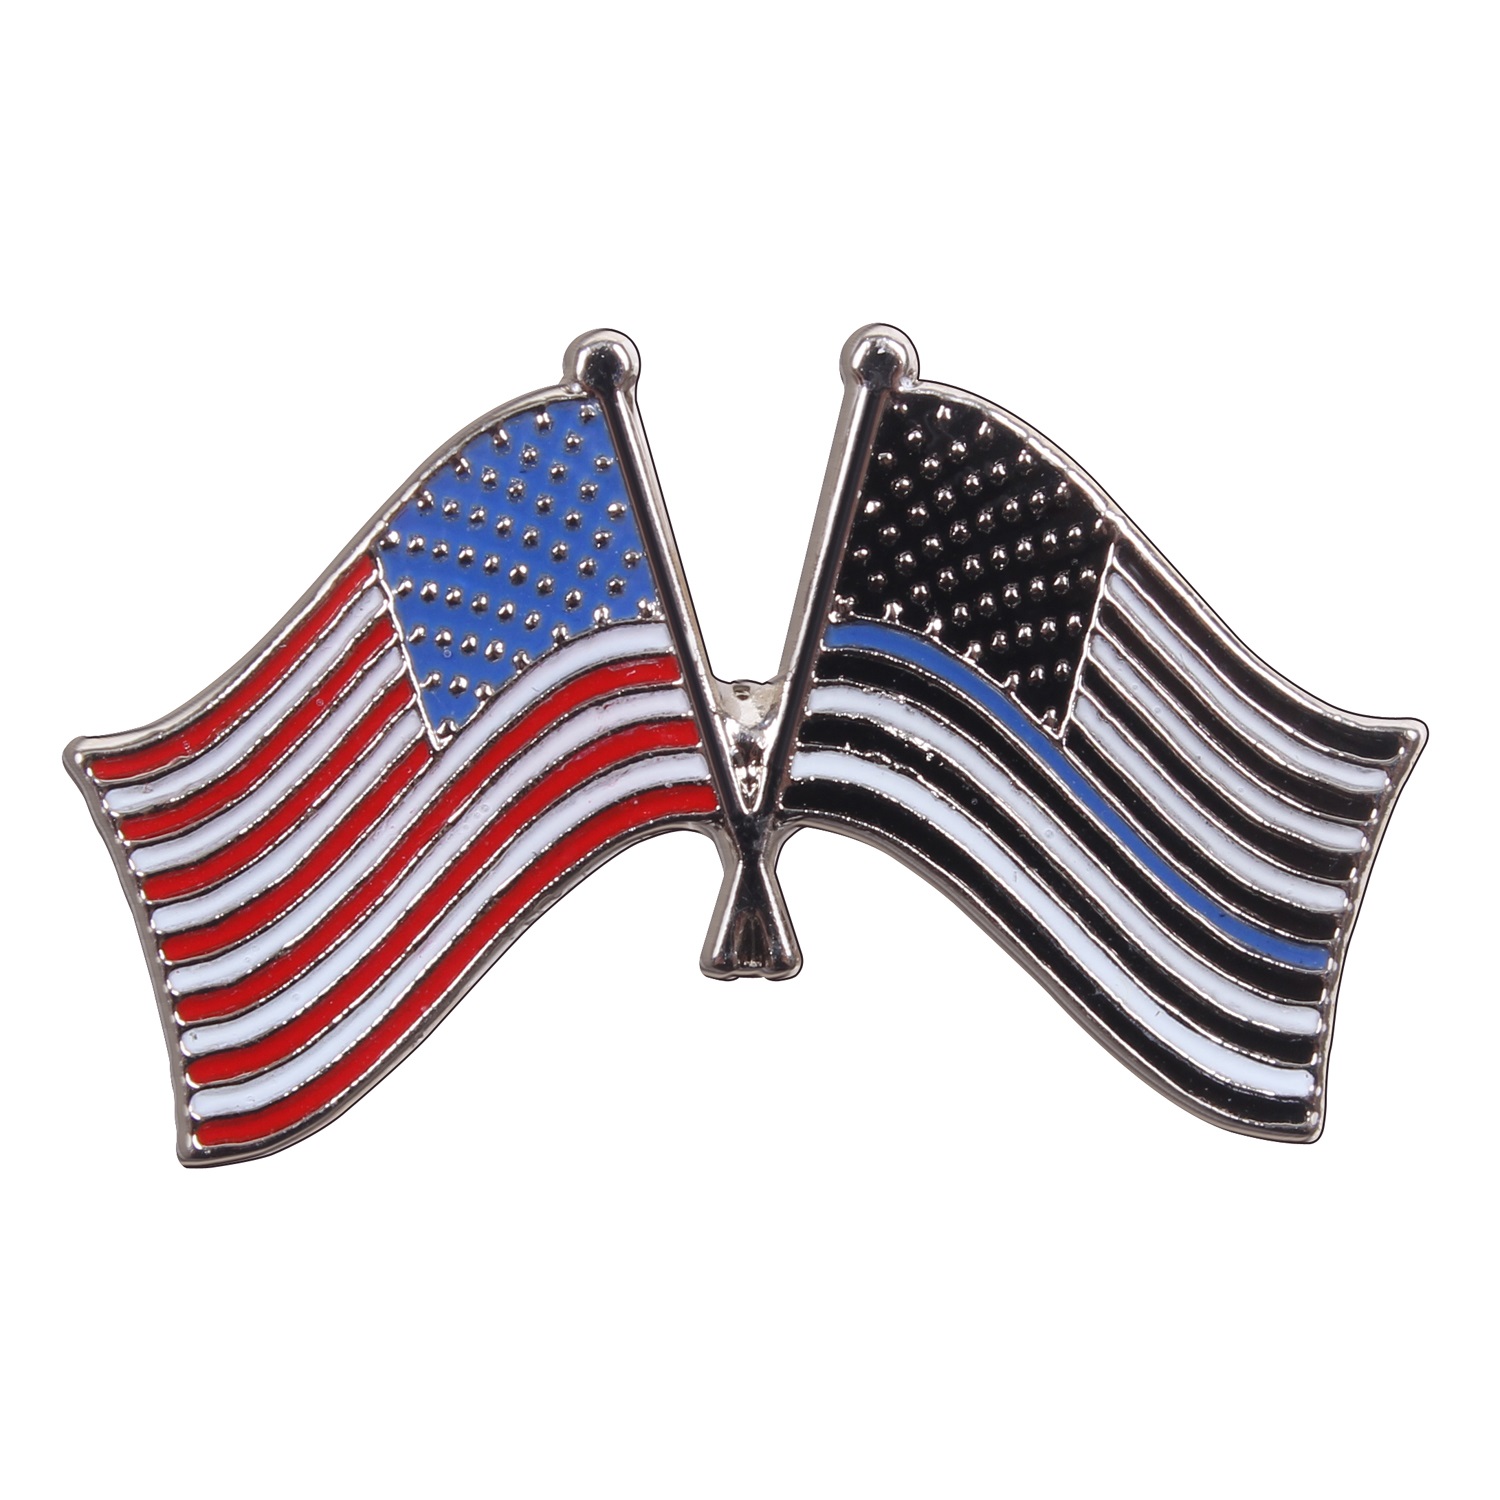 Odznak vlajka USA barevn a s modrou linkou